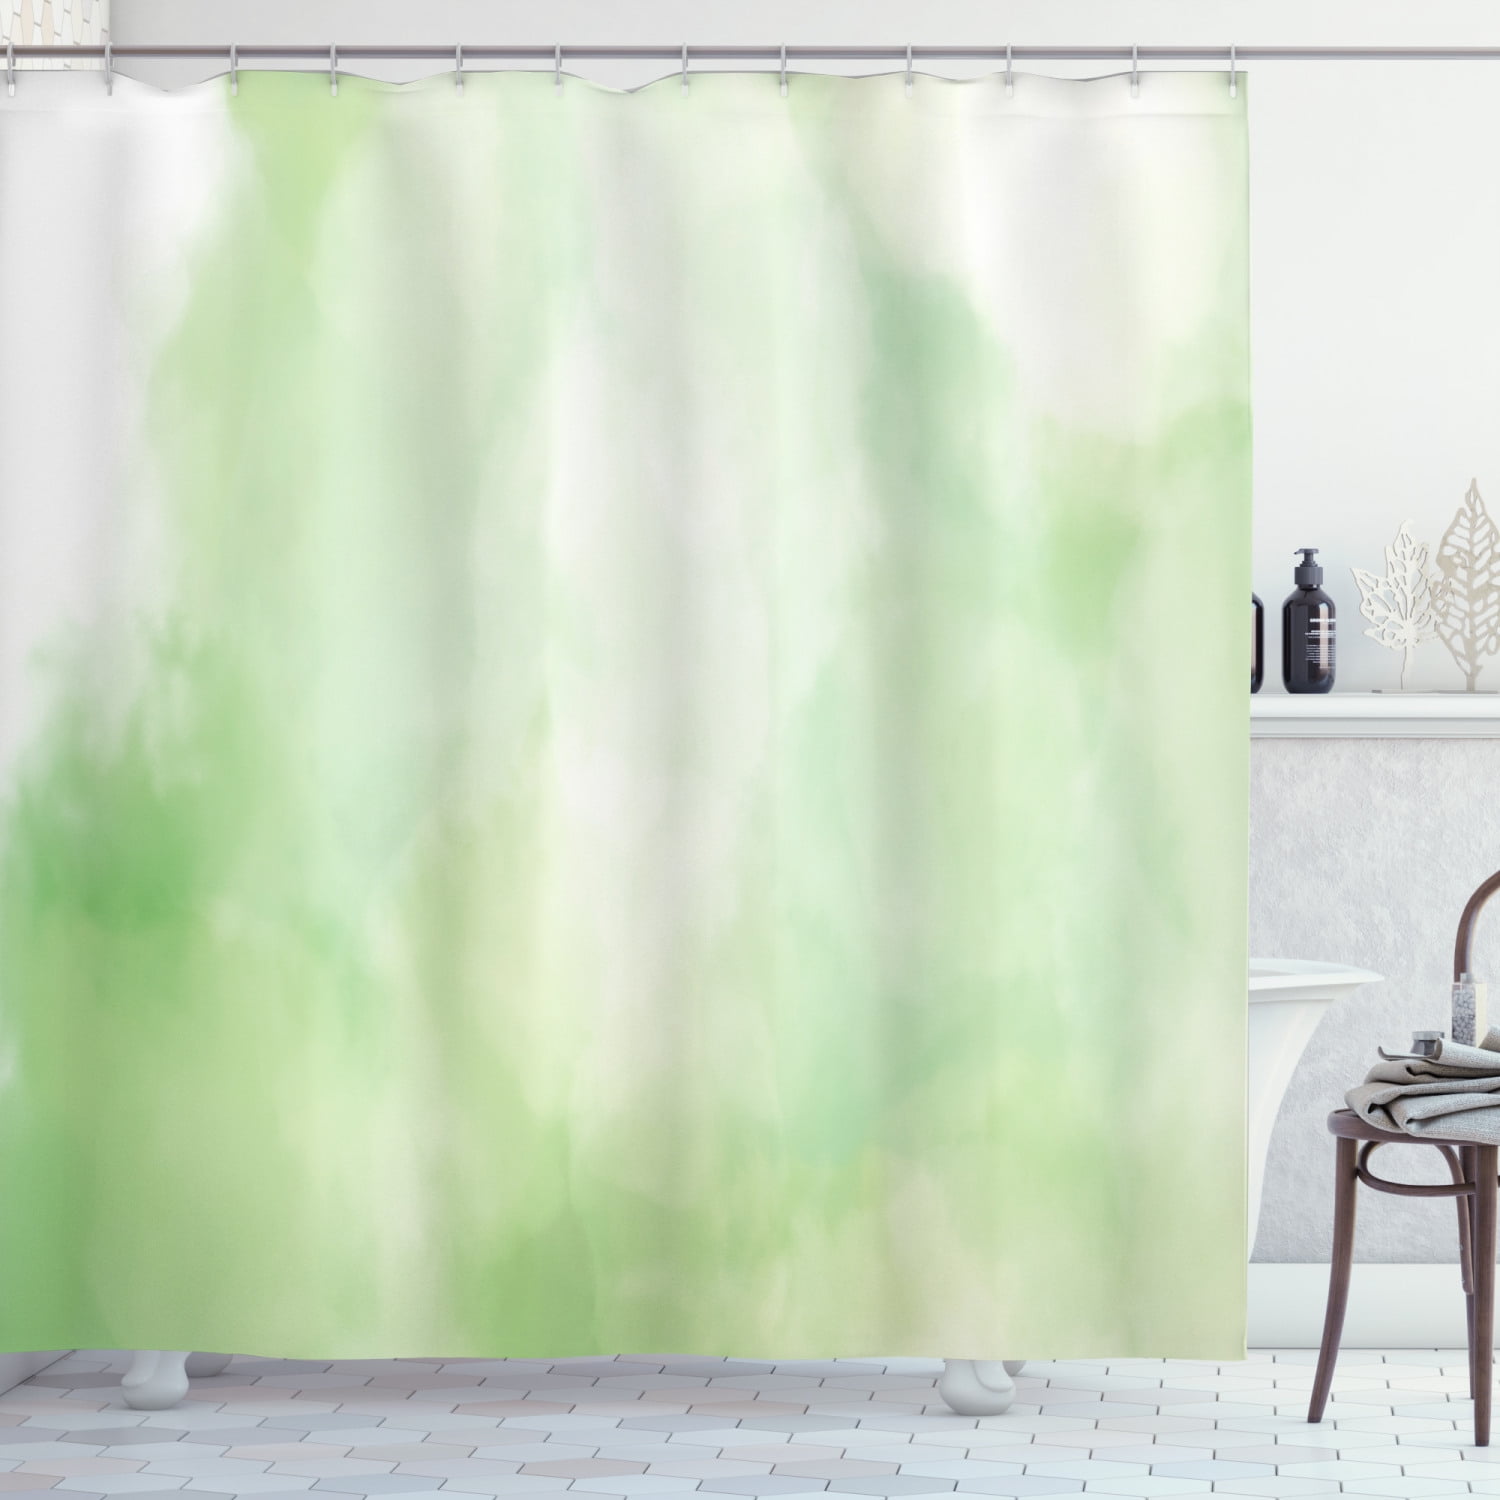 Fabric Shower Curtain Creative Color Stripe Bathroom Waterproof 72inch & 12Hooks 